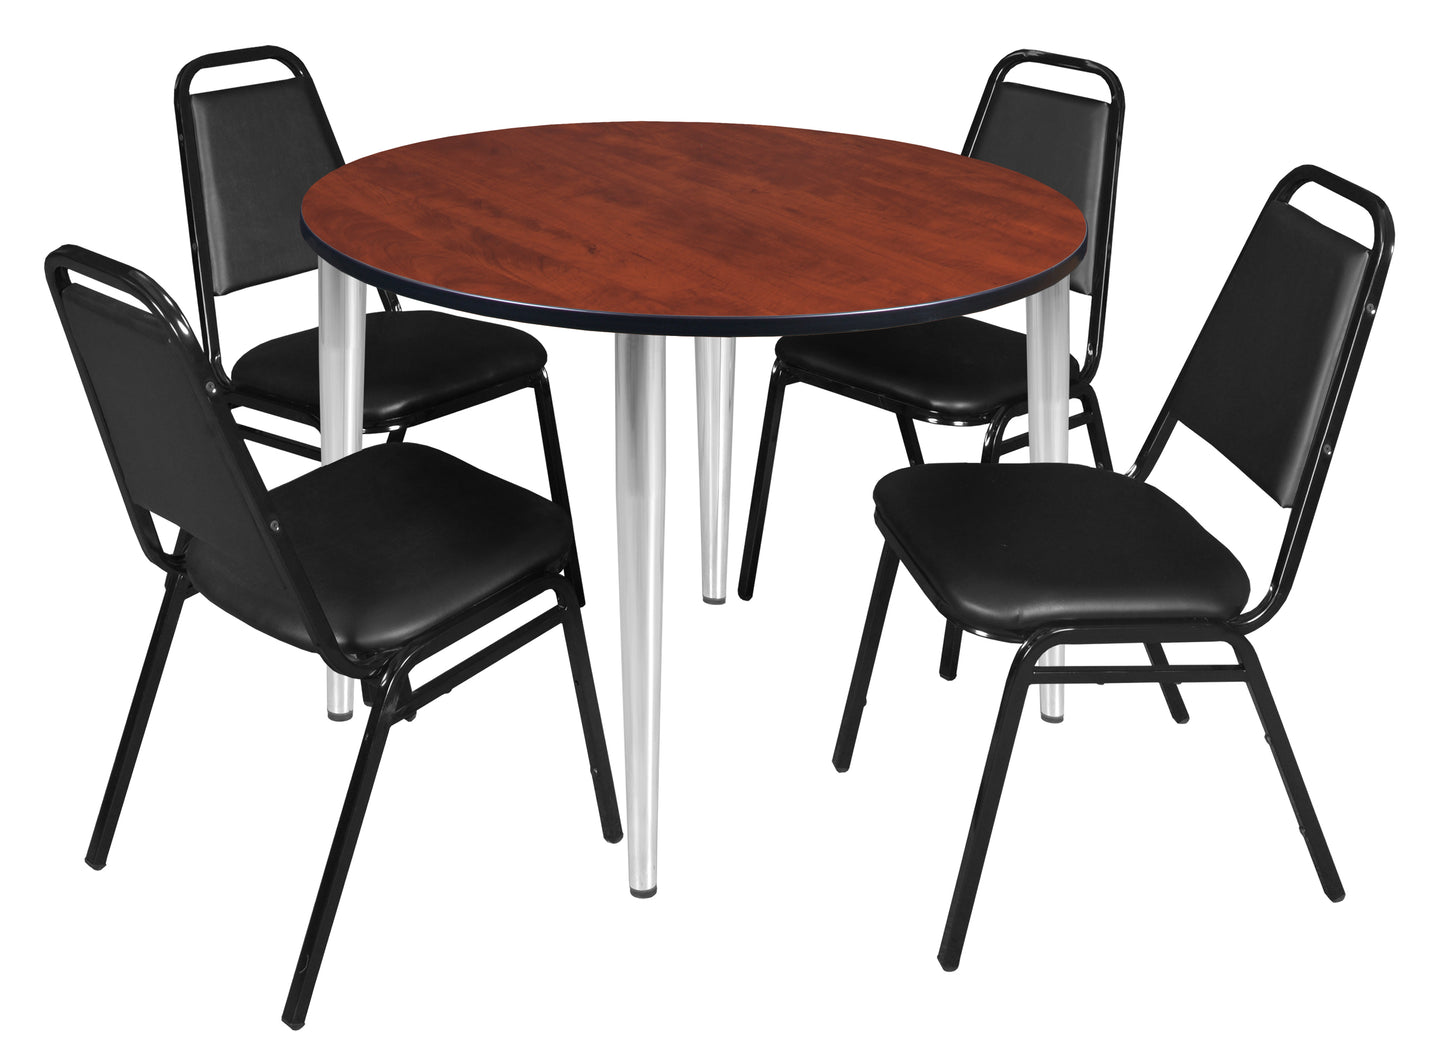 Regency Kahlo 48 in. Round Breakroom Table & 4 Restaurant Stack Chairs - Black